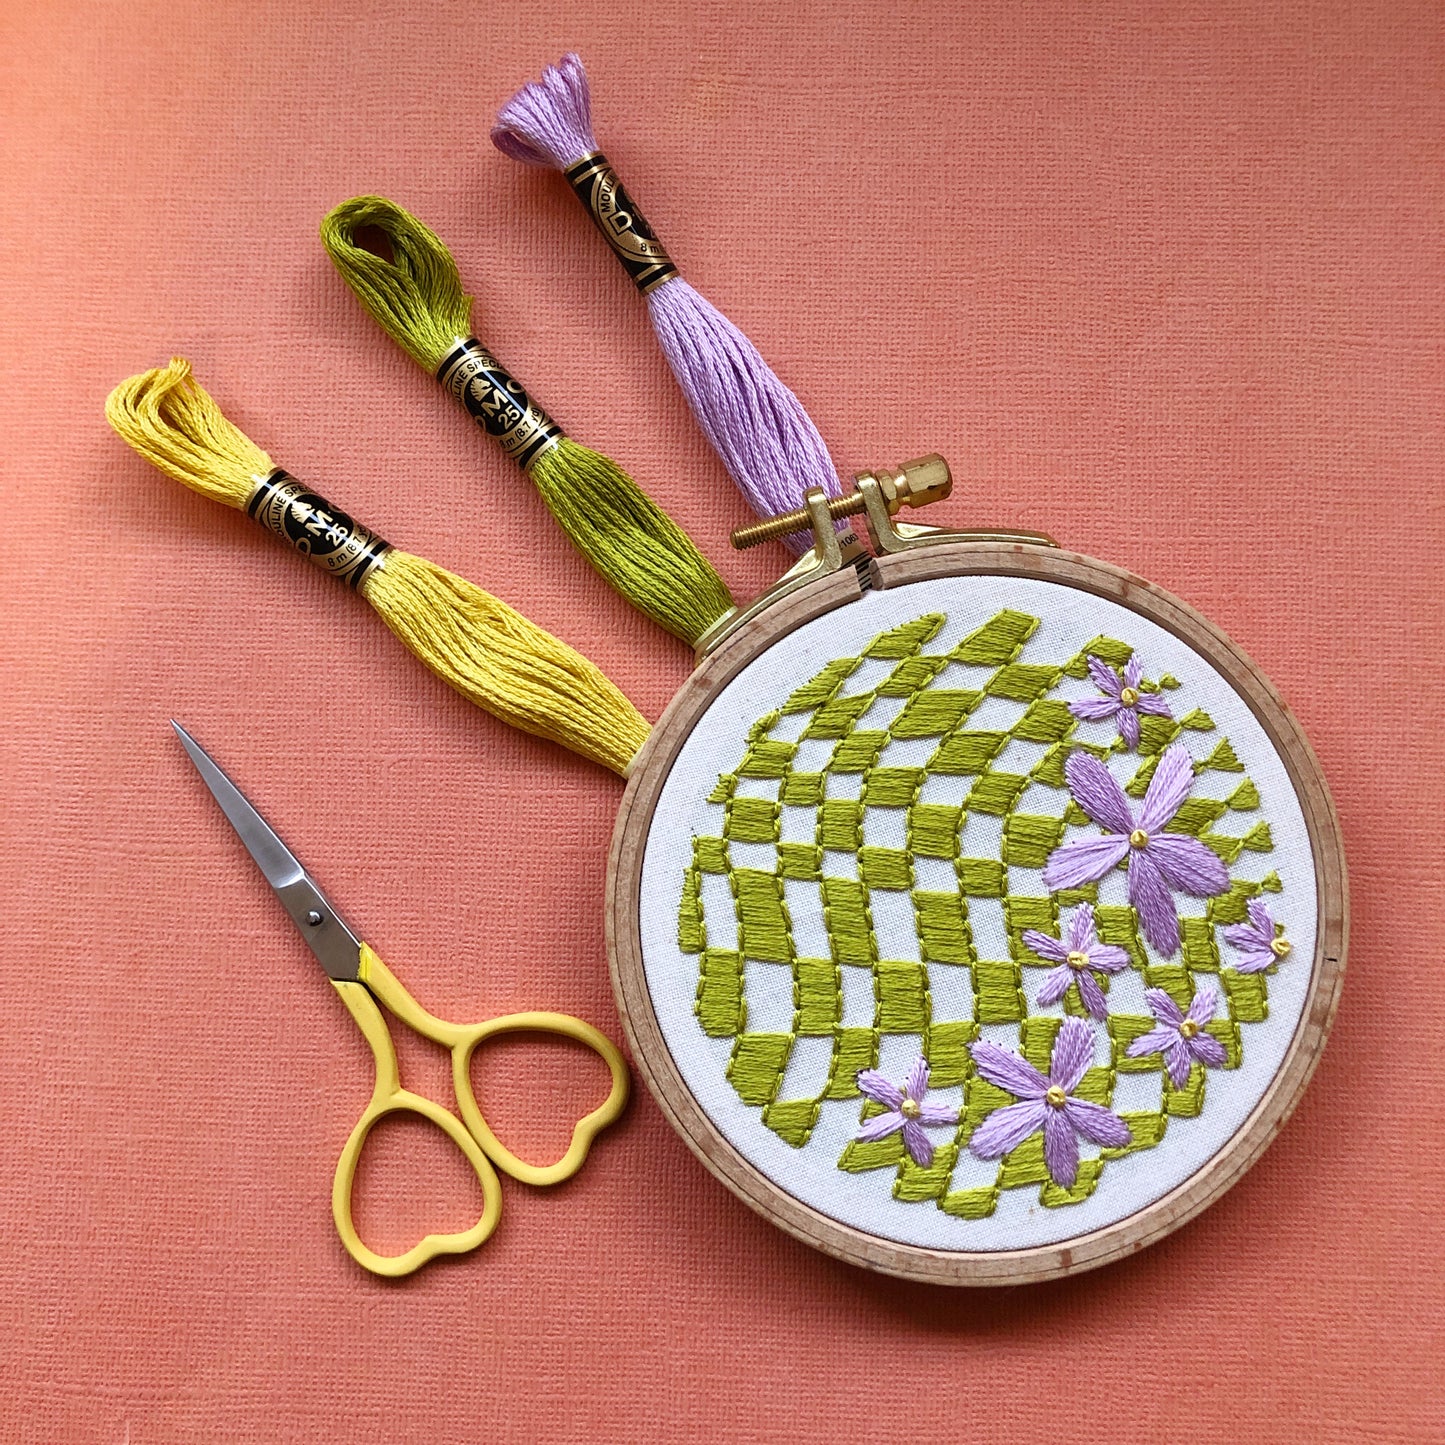 Checkerboard Daisy - DIY Beginner Embroidery Craft Kit